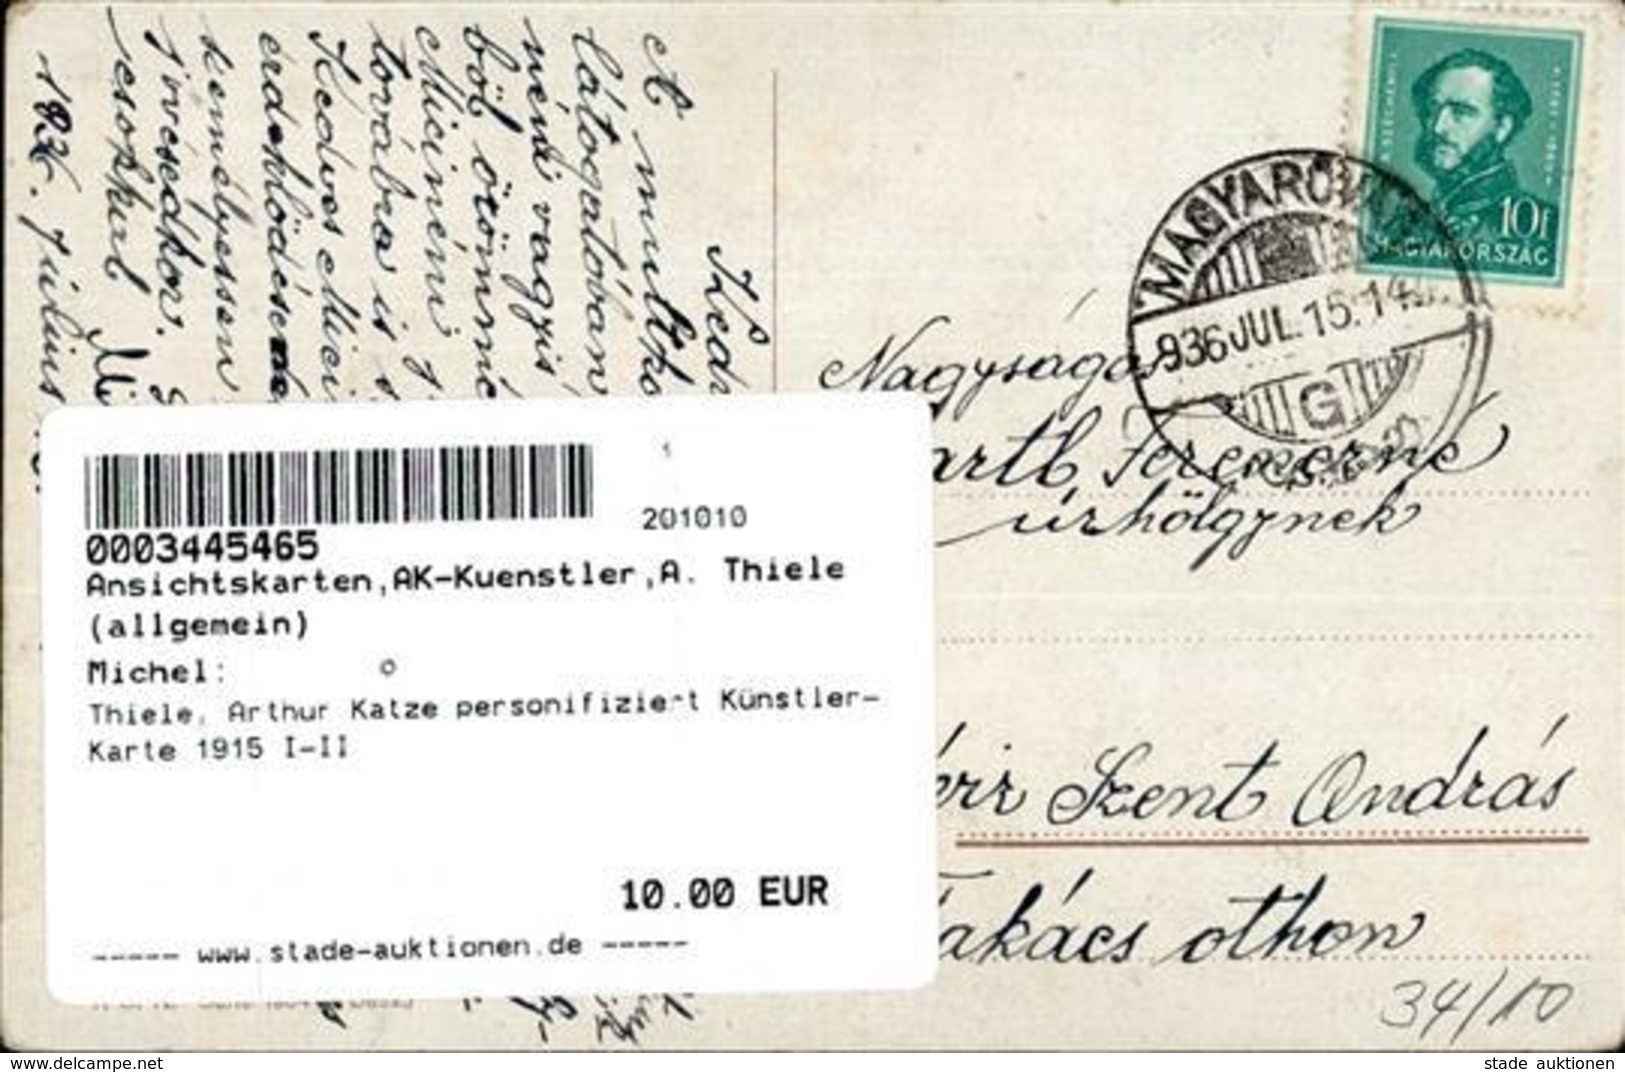 Thiele, Arthur Katze Personifiziert Künstler-Karte 1915 I-II Chat - Thiele, Arthur